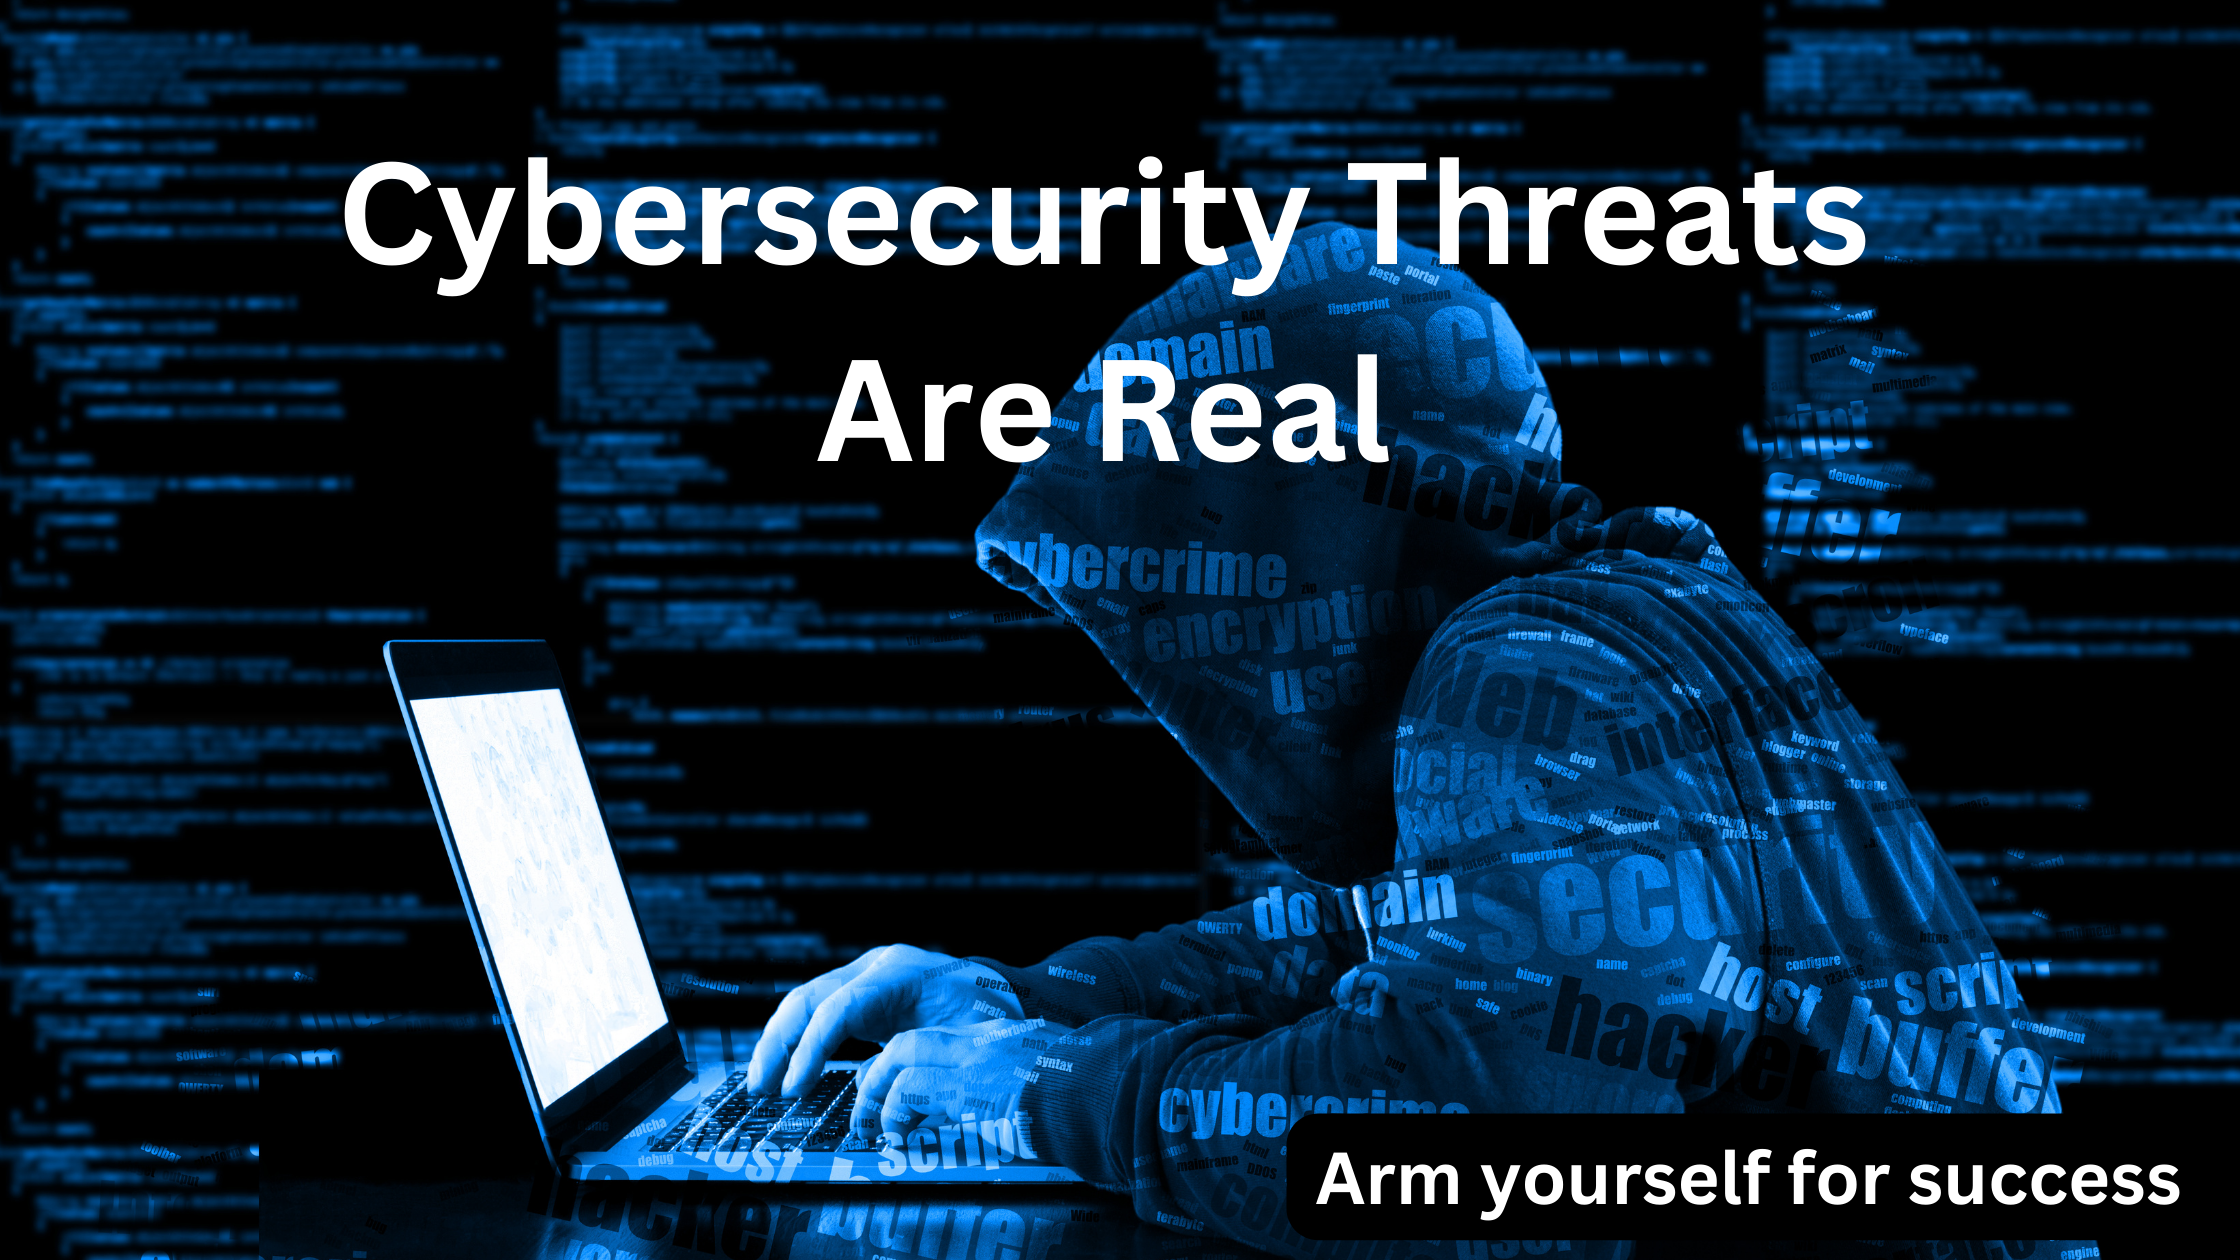 M7 Cybersecurity Threat Description